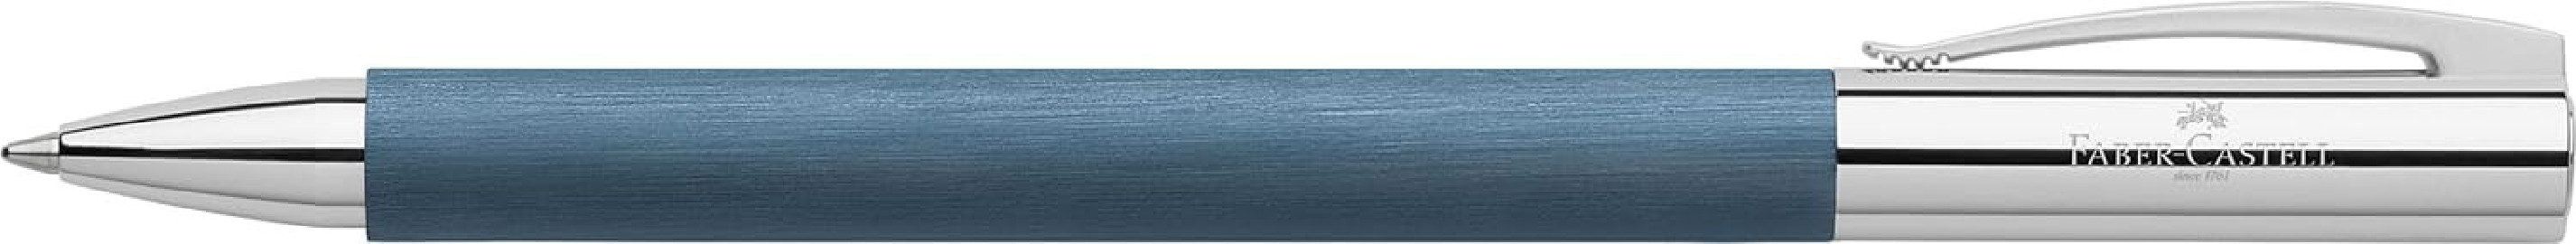 Faber Castell Ambition 147145 Ballpoint Pen Stainless Resin Blue